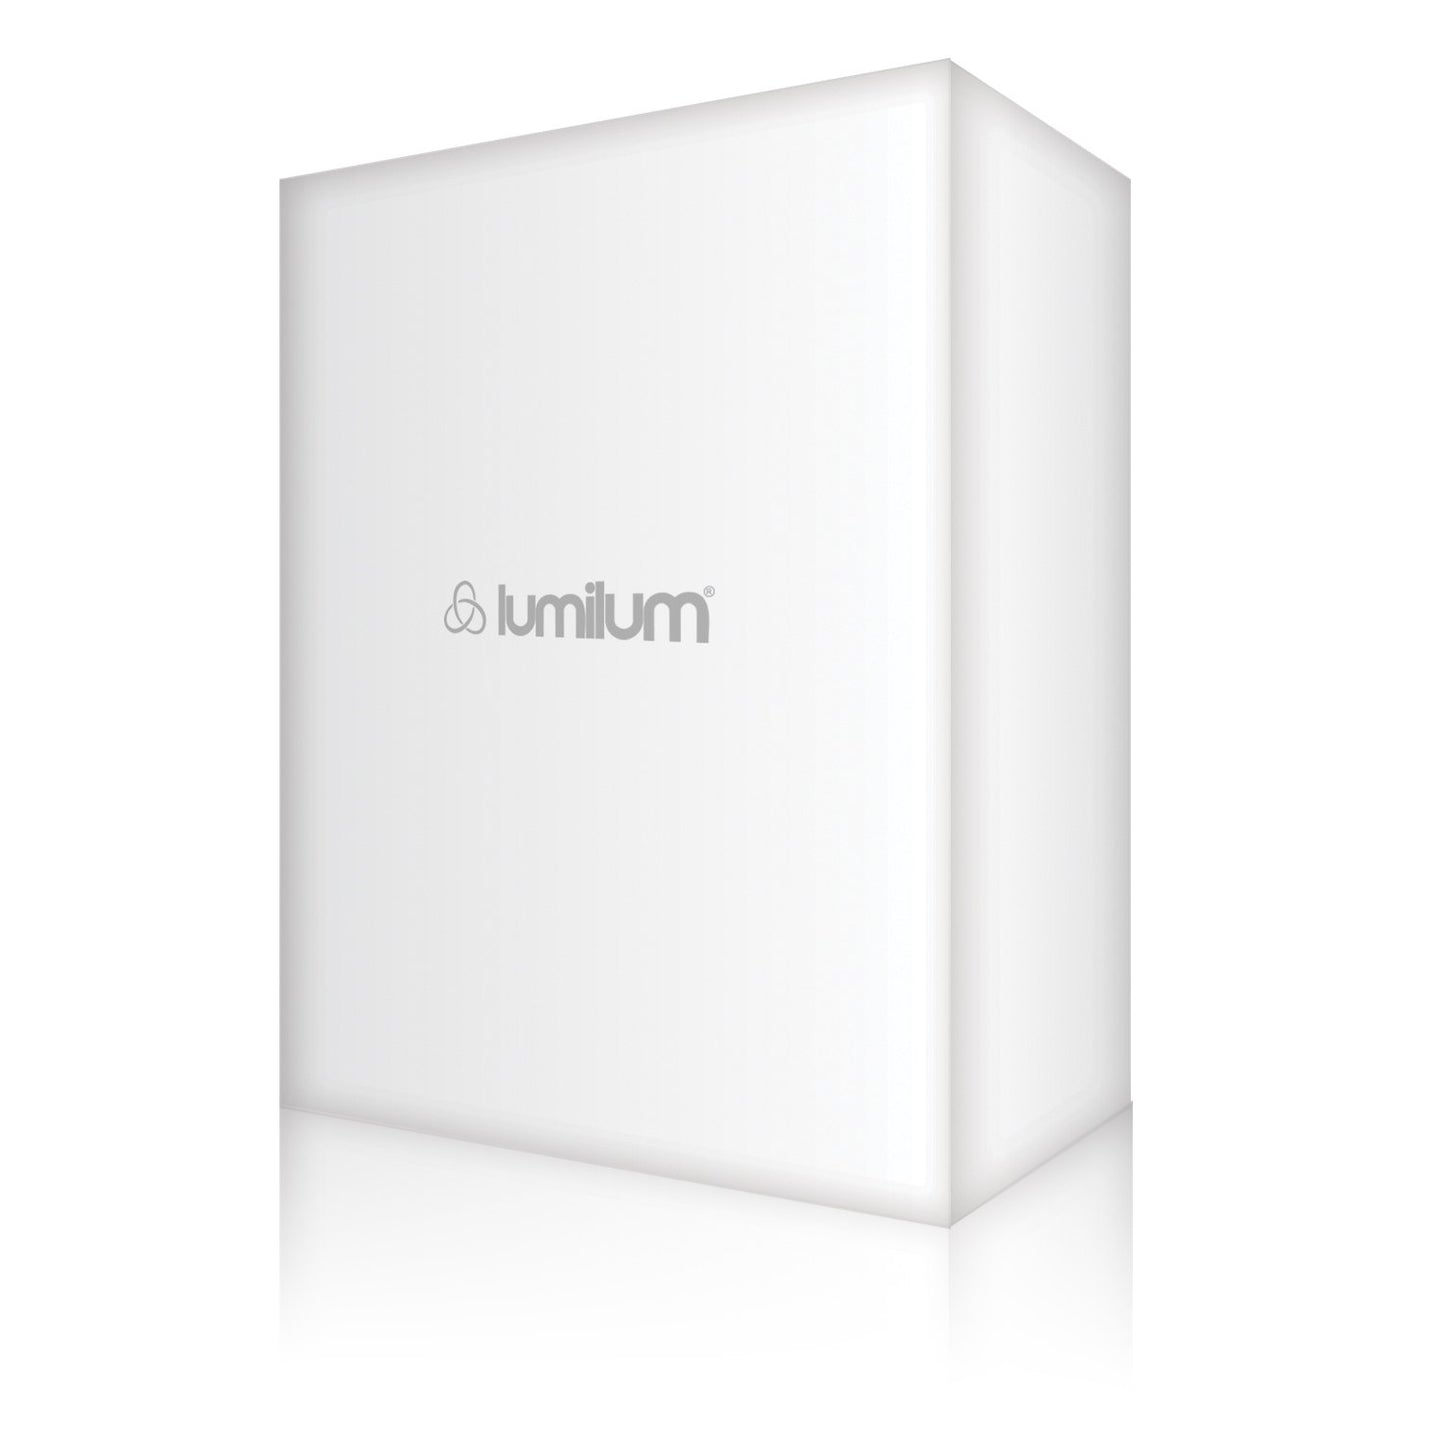 digital rendering of white square box with lumilum led lighting logo in gray